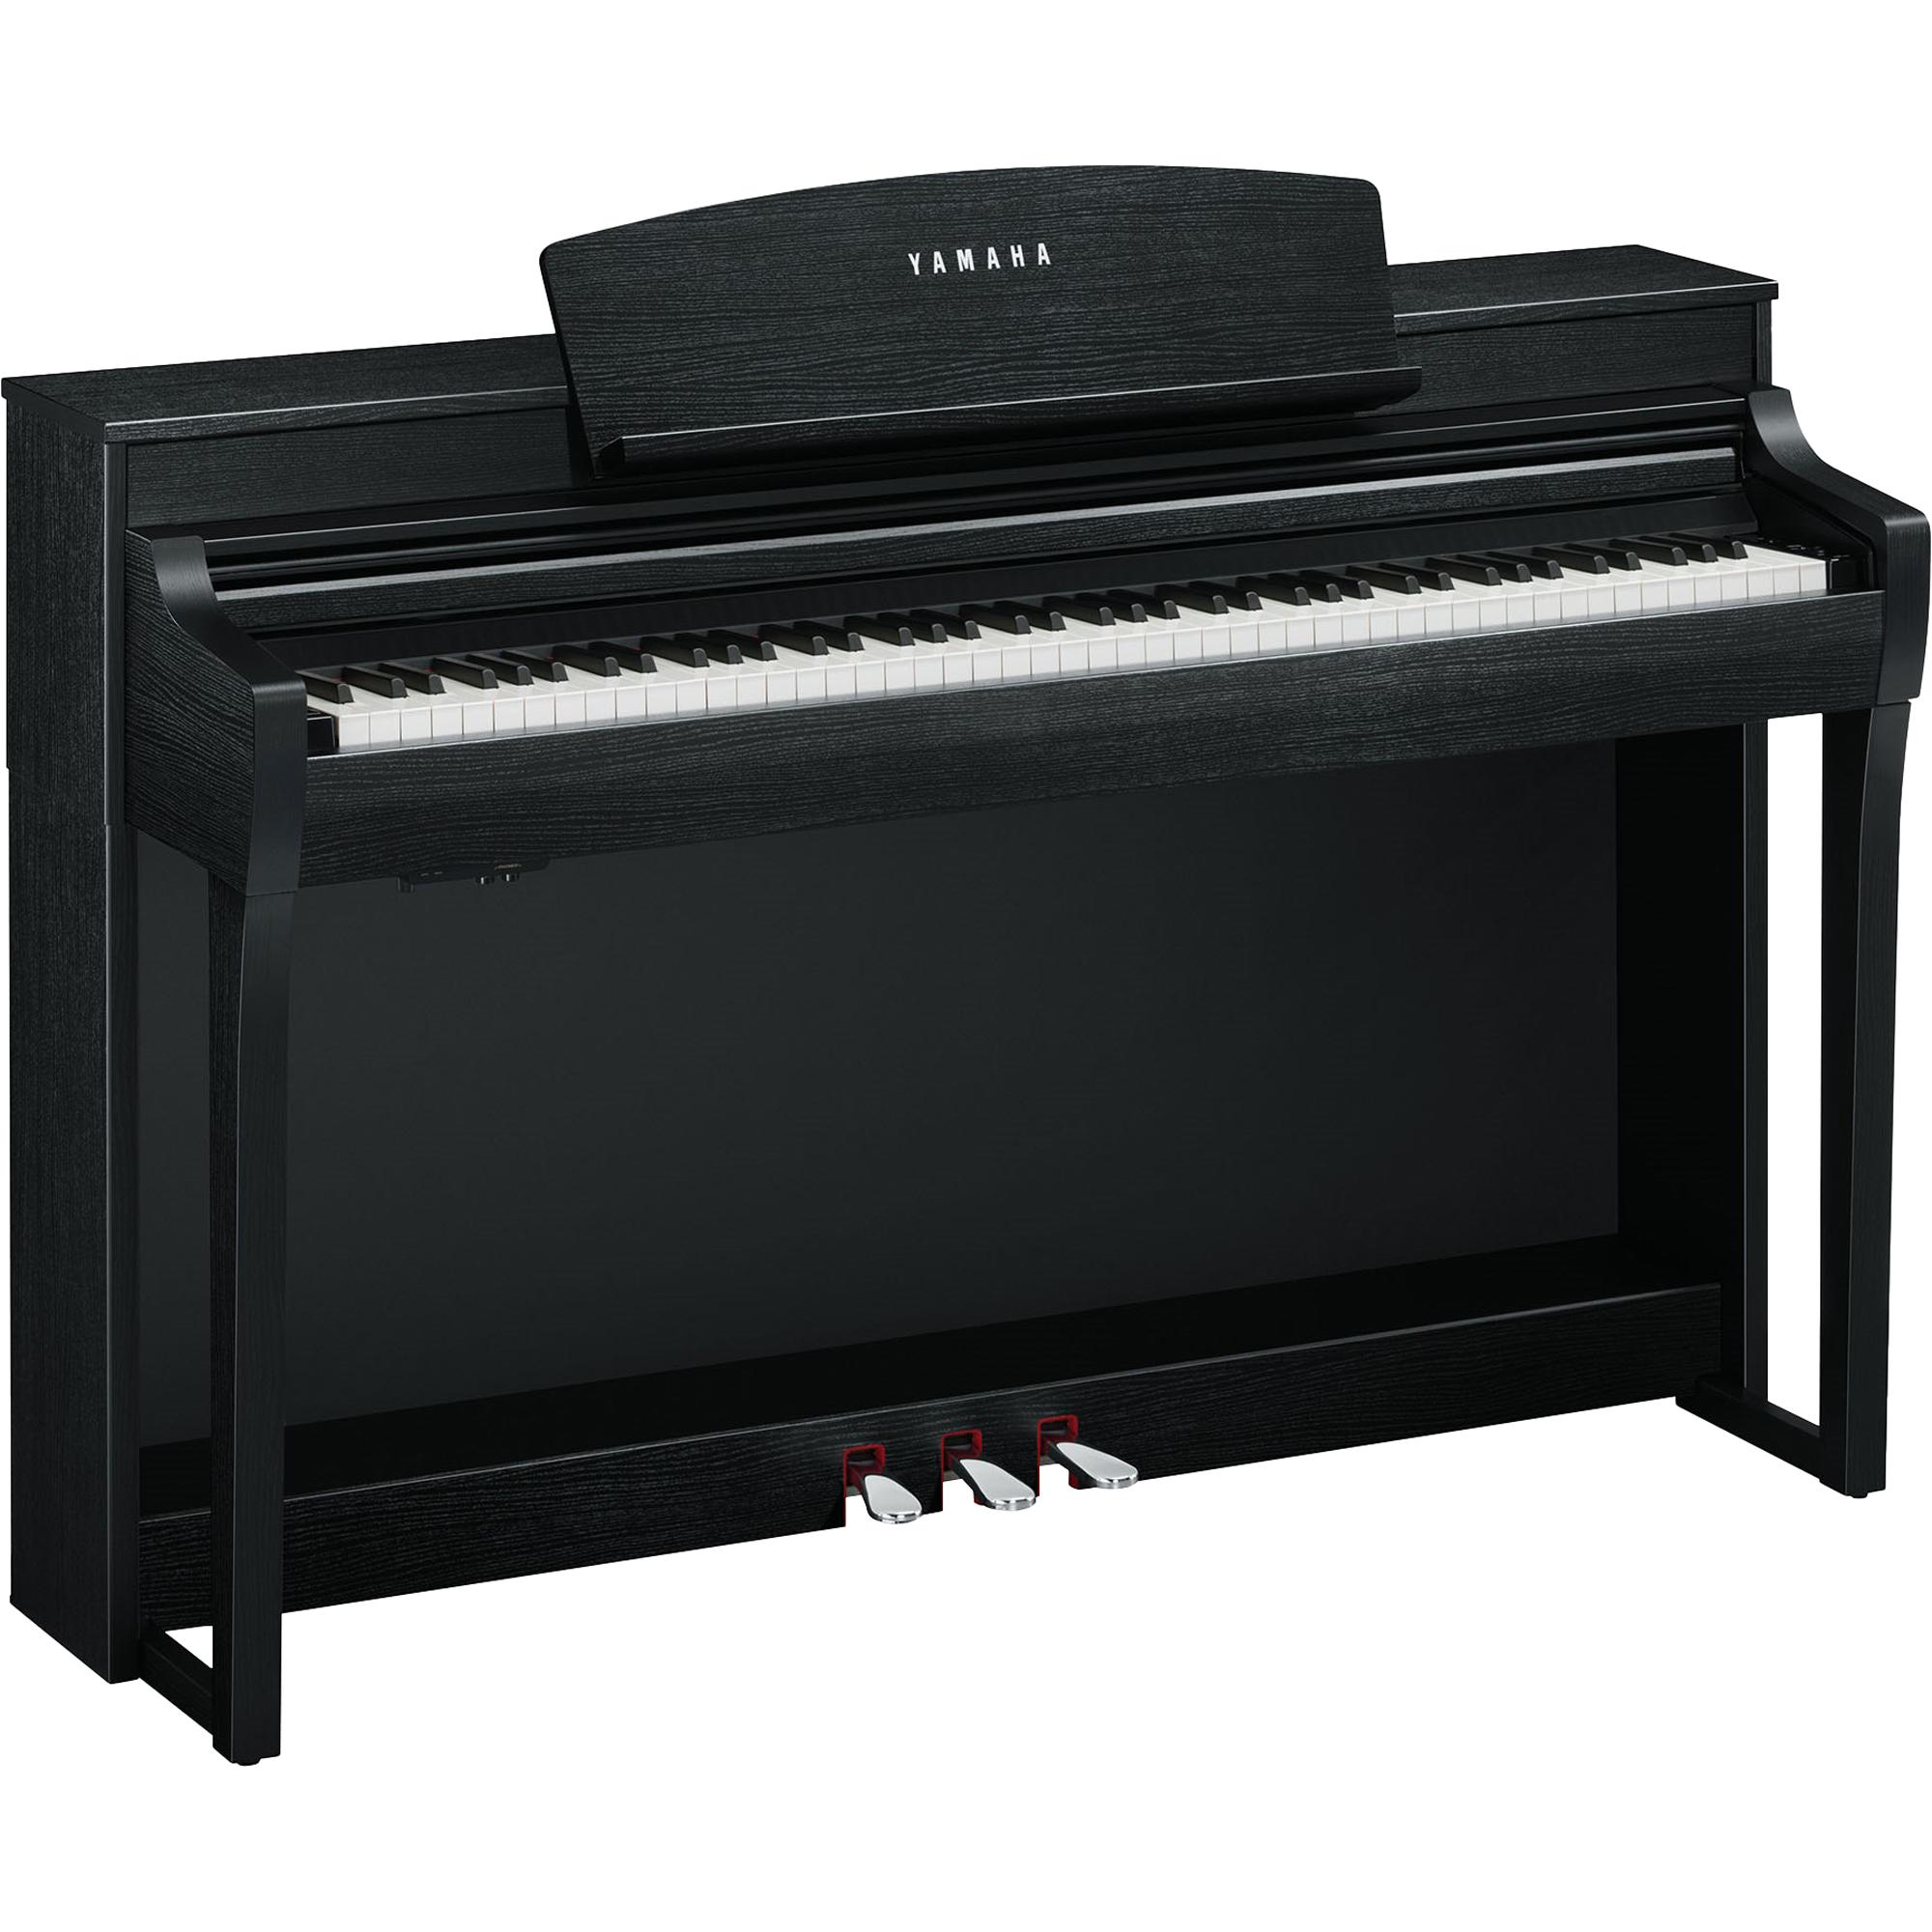 Piano Yamaha Clavinova CSP-255 Digital Preto